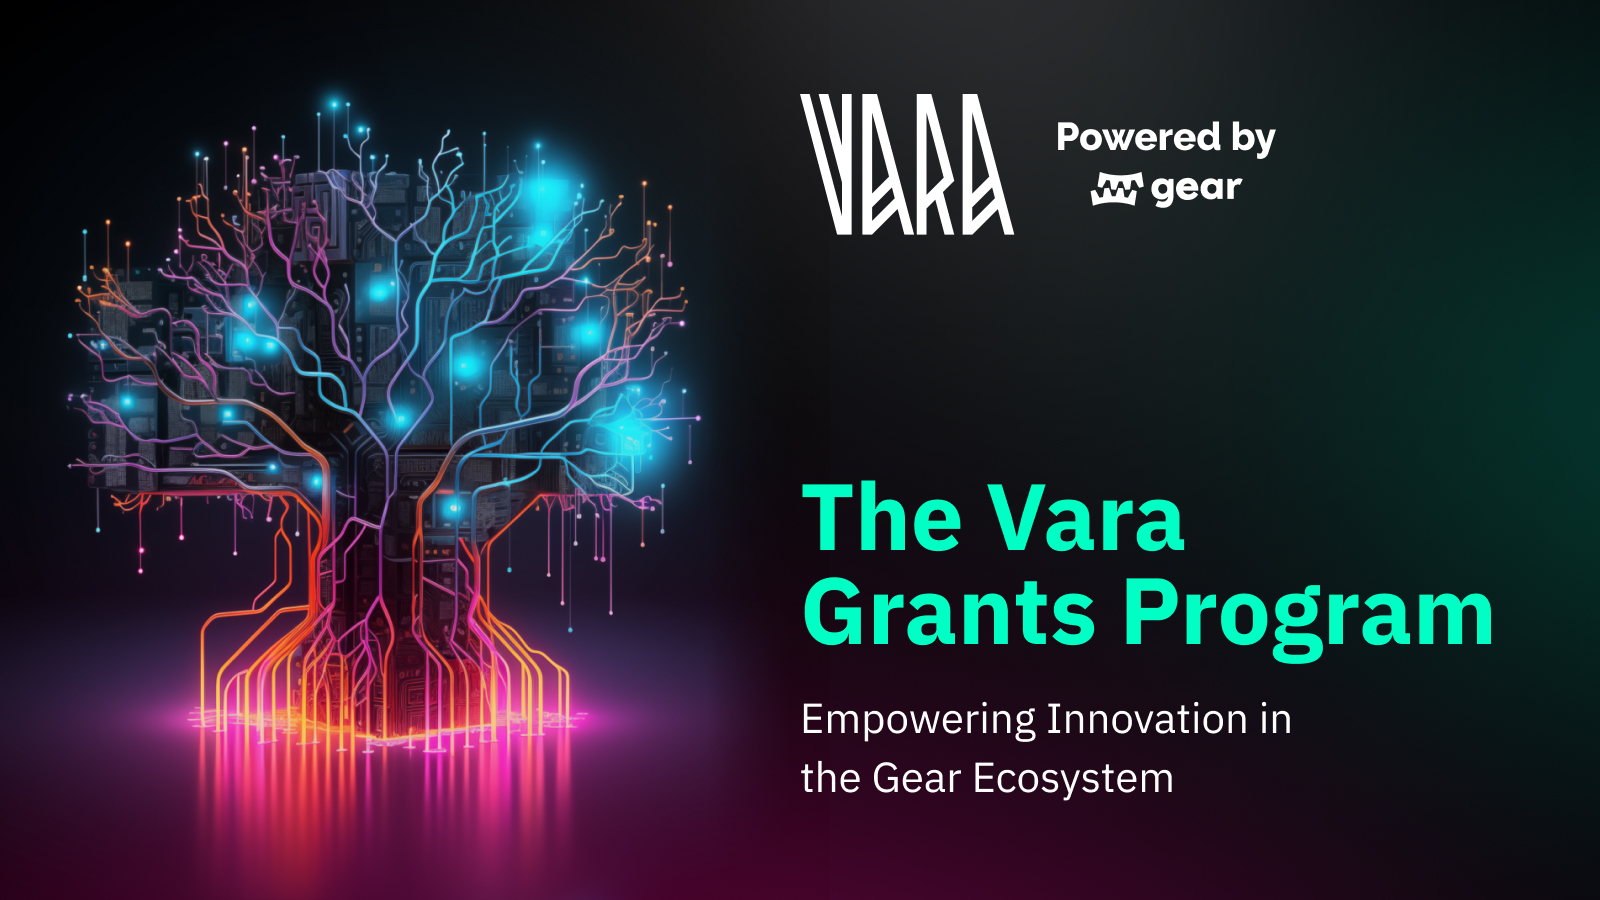 The Vara Grants Program: Empowering Innovation in the Gear Ecosystem